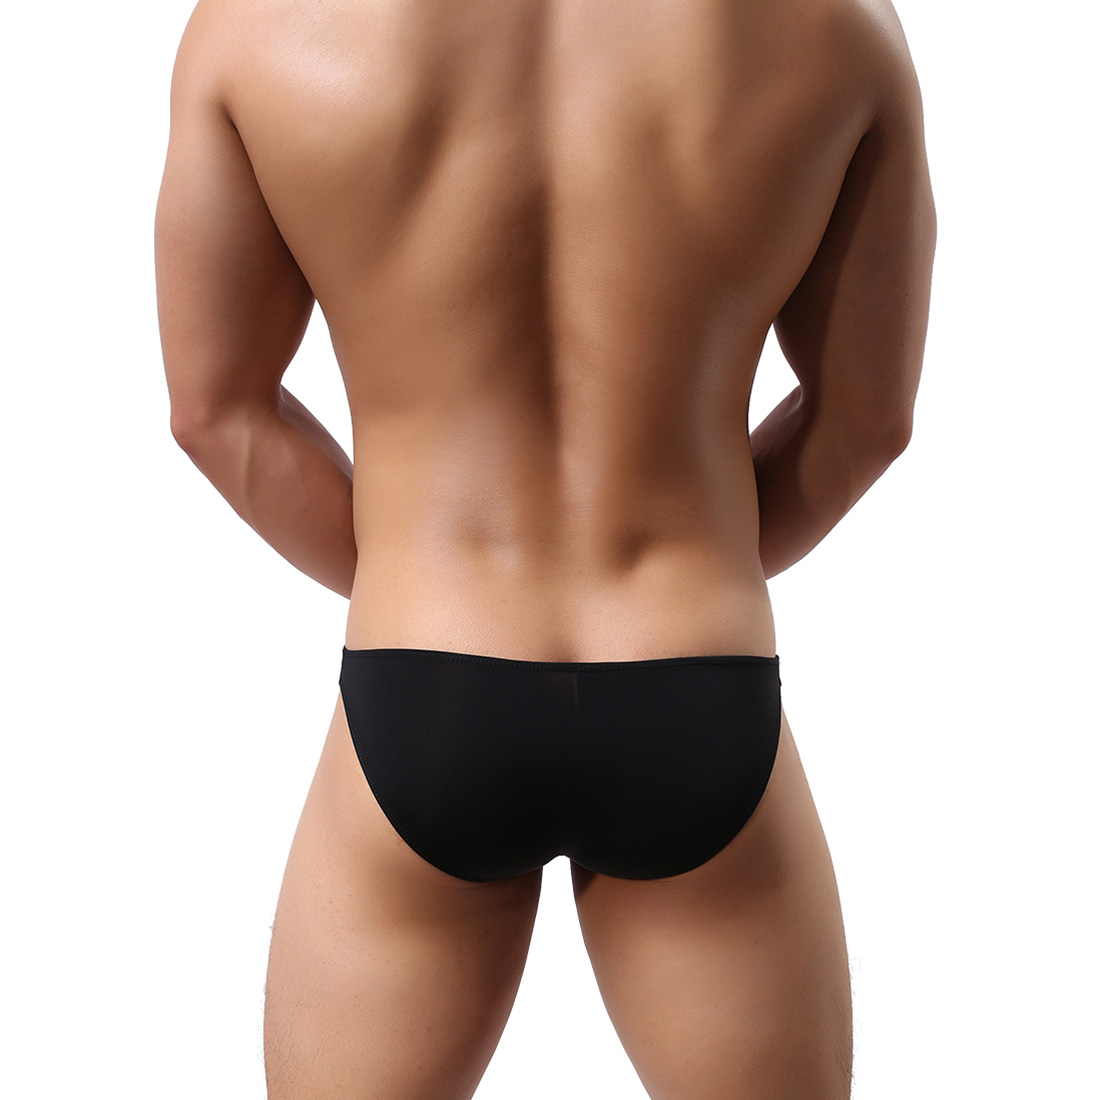 Men's Lingerie Underwear Sexy Bikini Triangle Pants Shorts with Penis Sheath WH44 Black XL